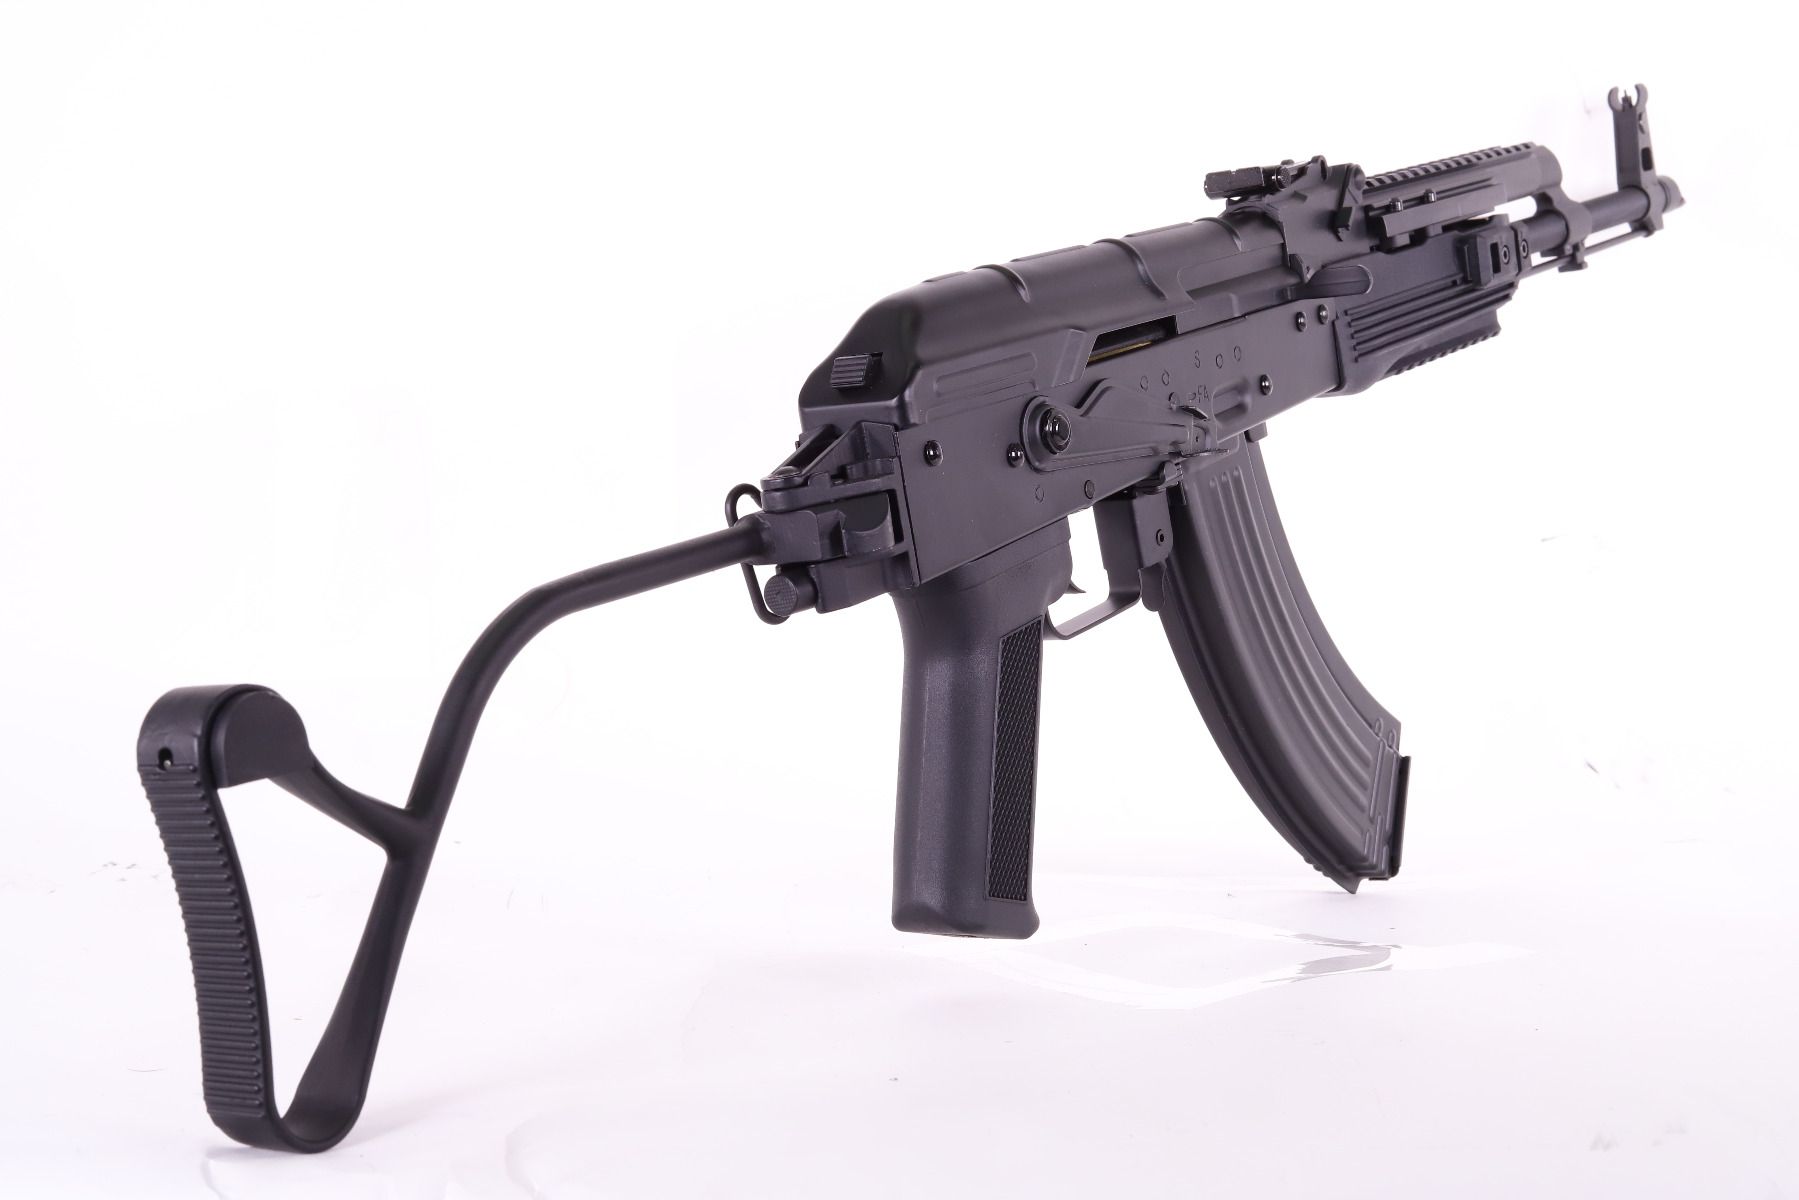 AIRSOFT Fusil mitrailleur Kalashnikov AK47 Spring crosse imitation